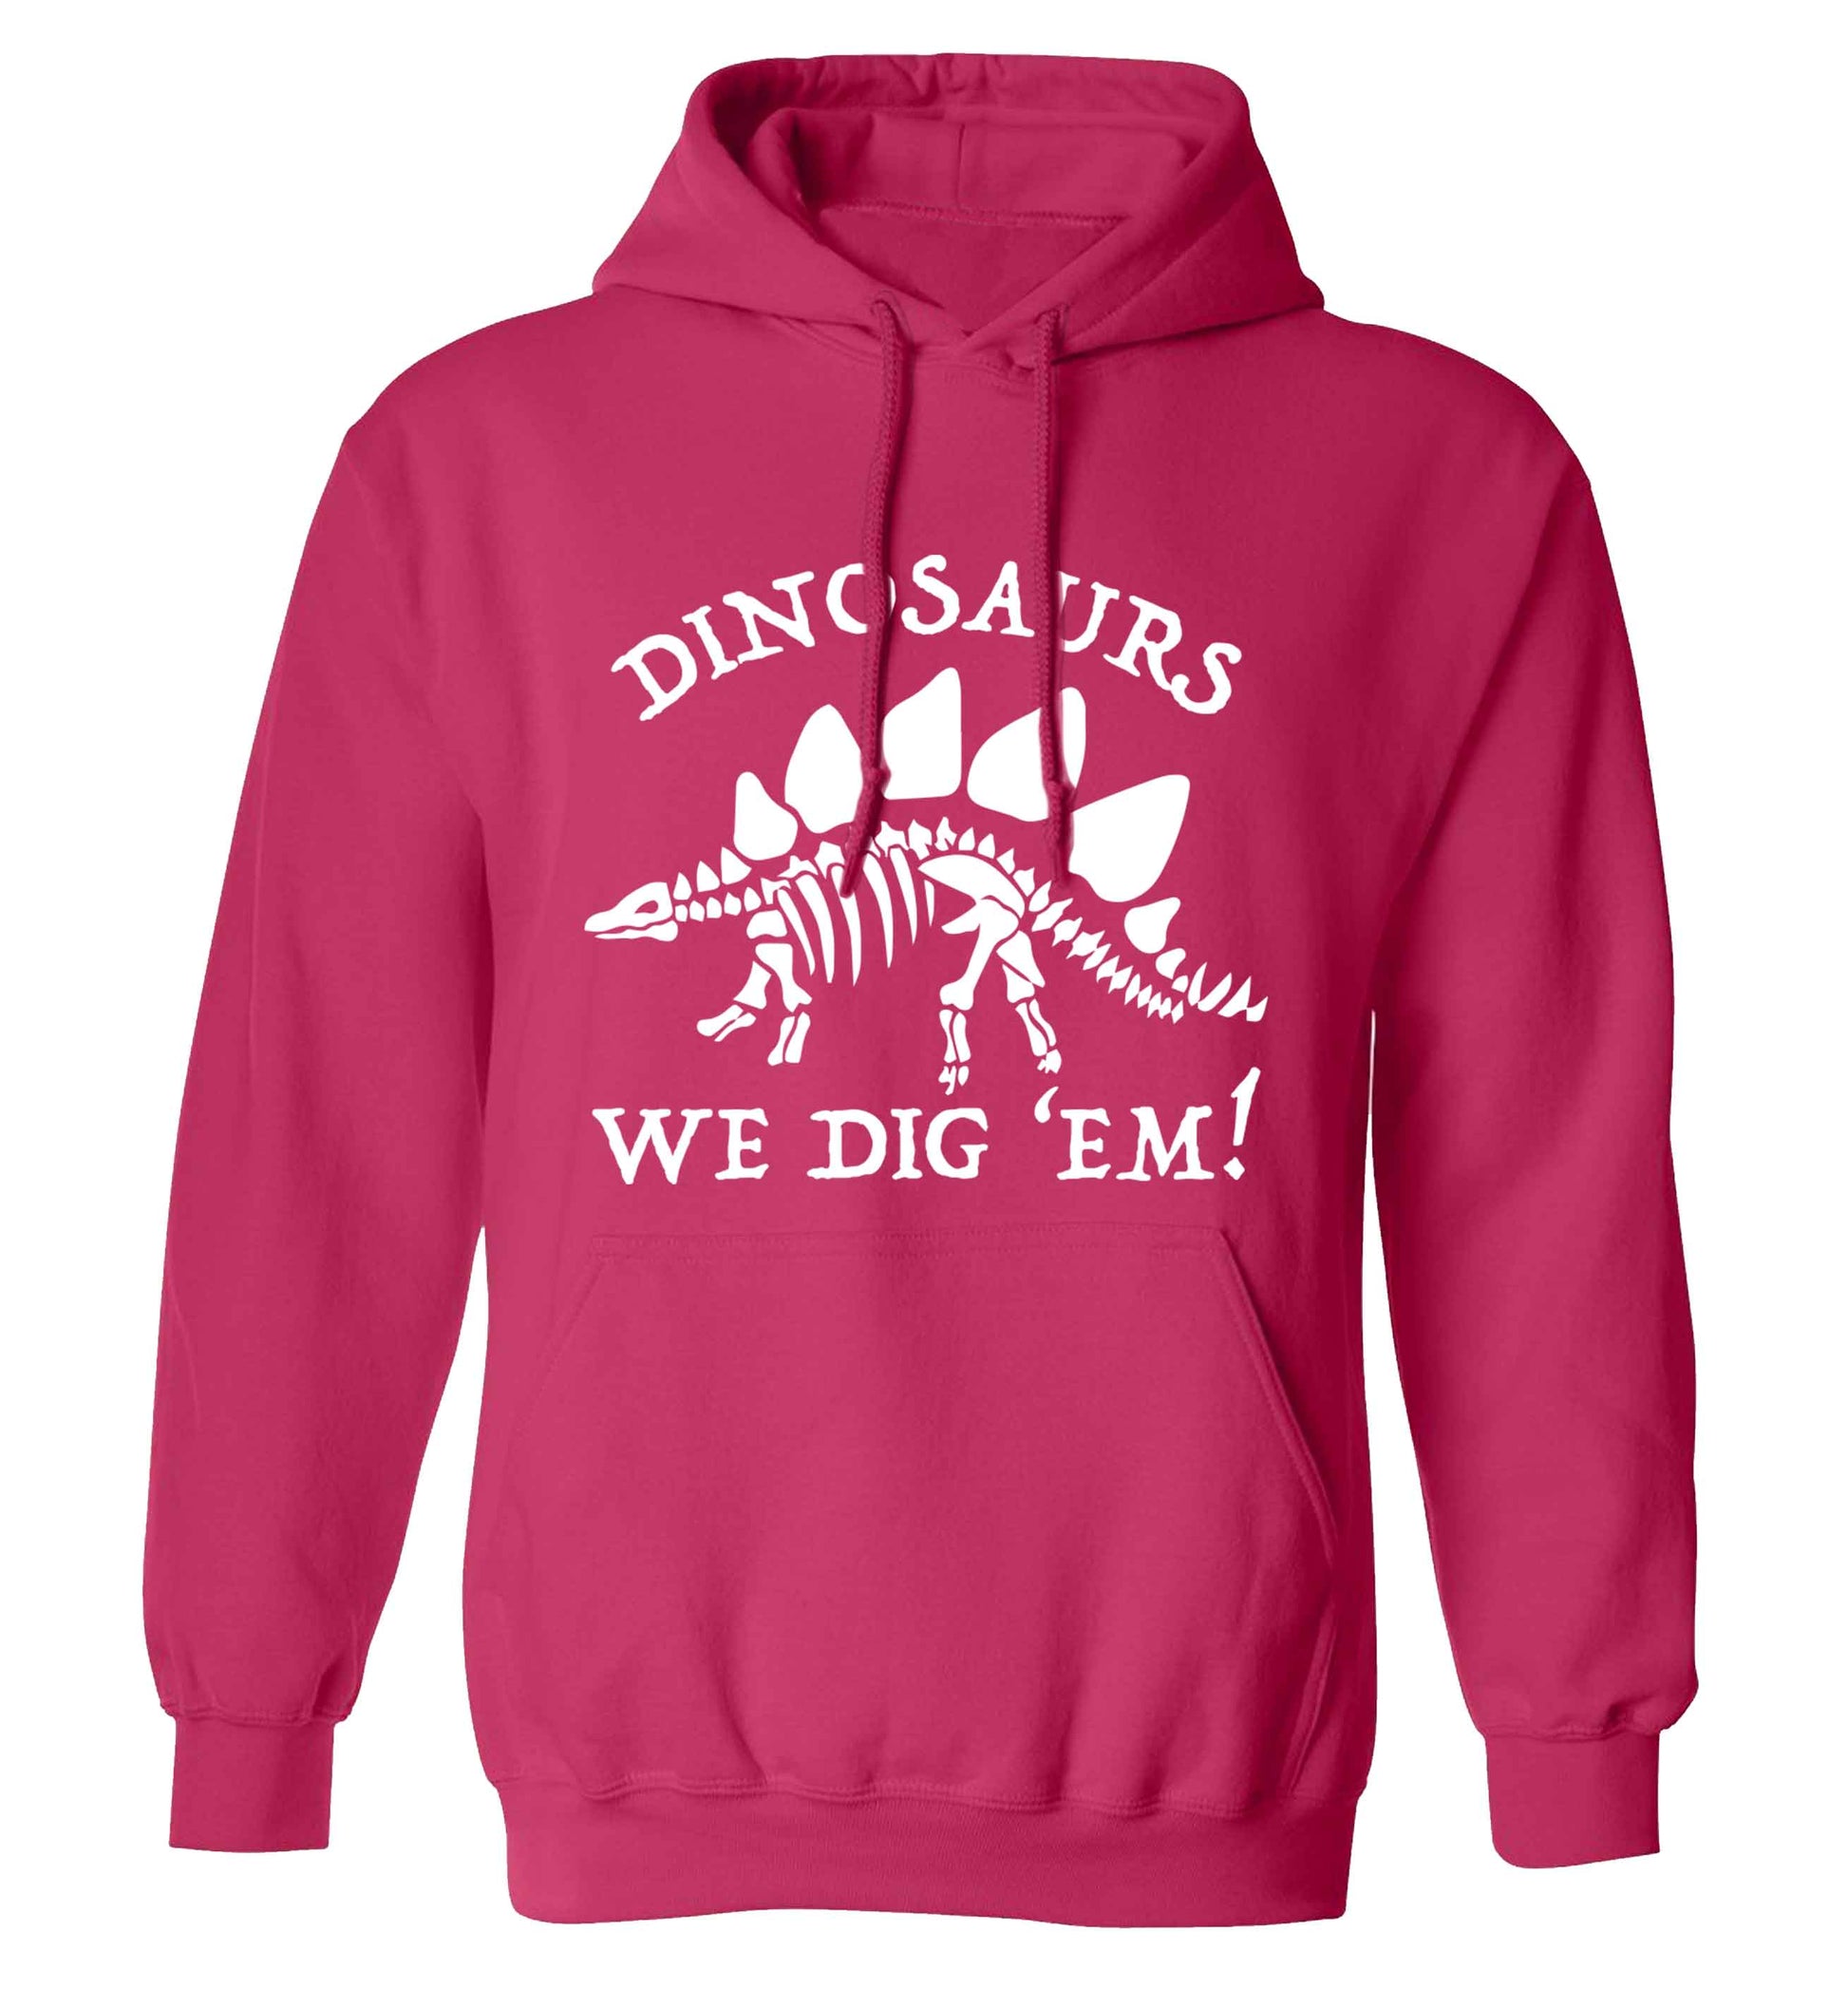 Dinosaurs we dig 'em! adults unisex pink hoodie 2XL